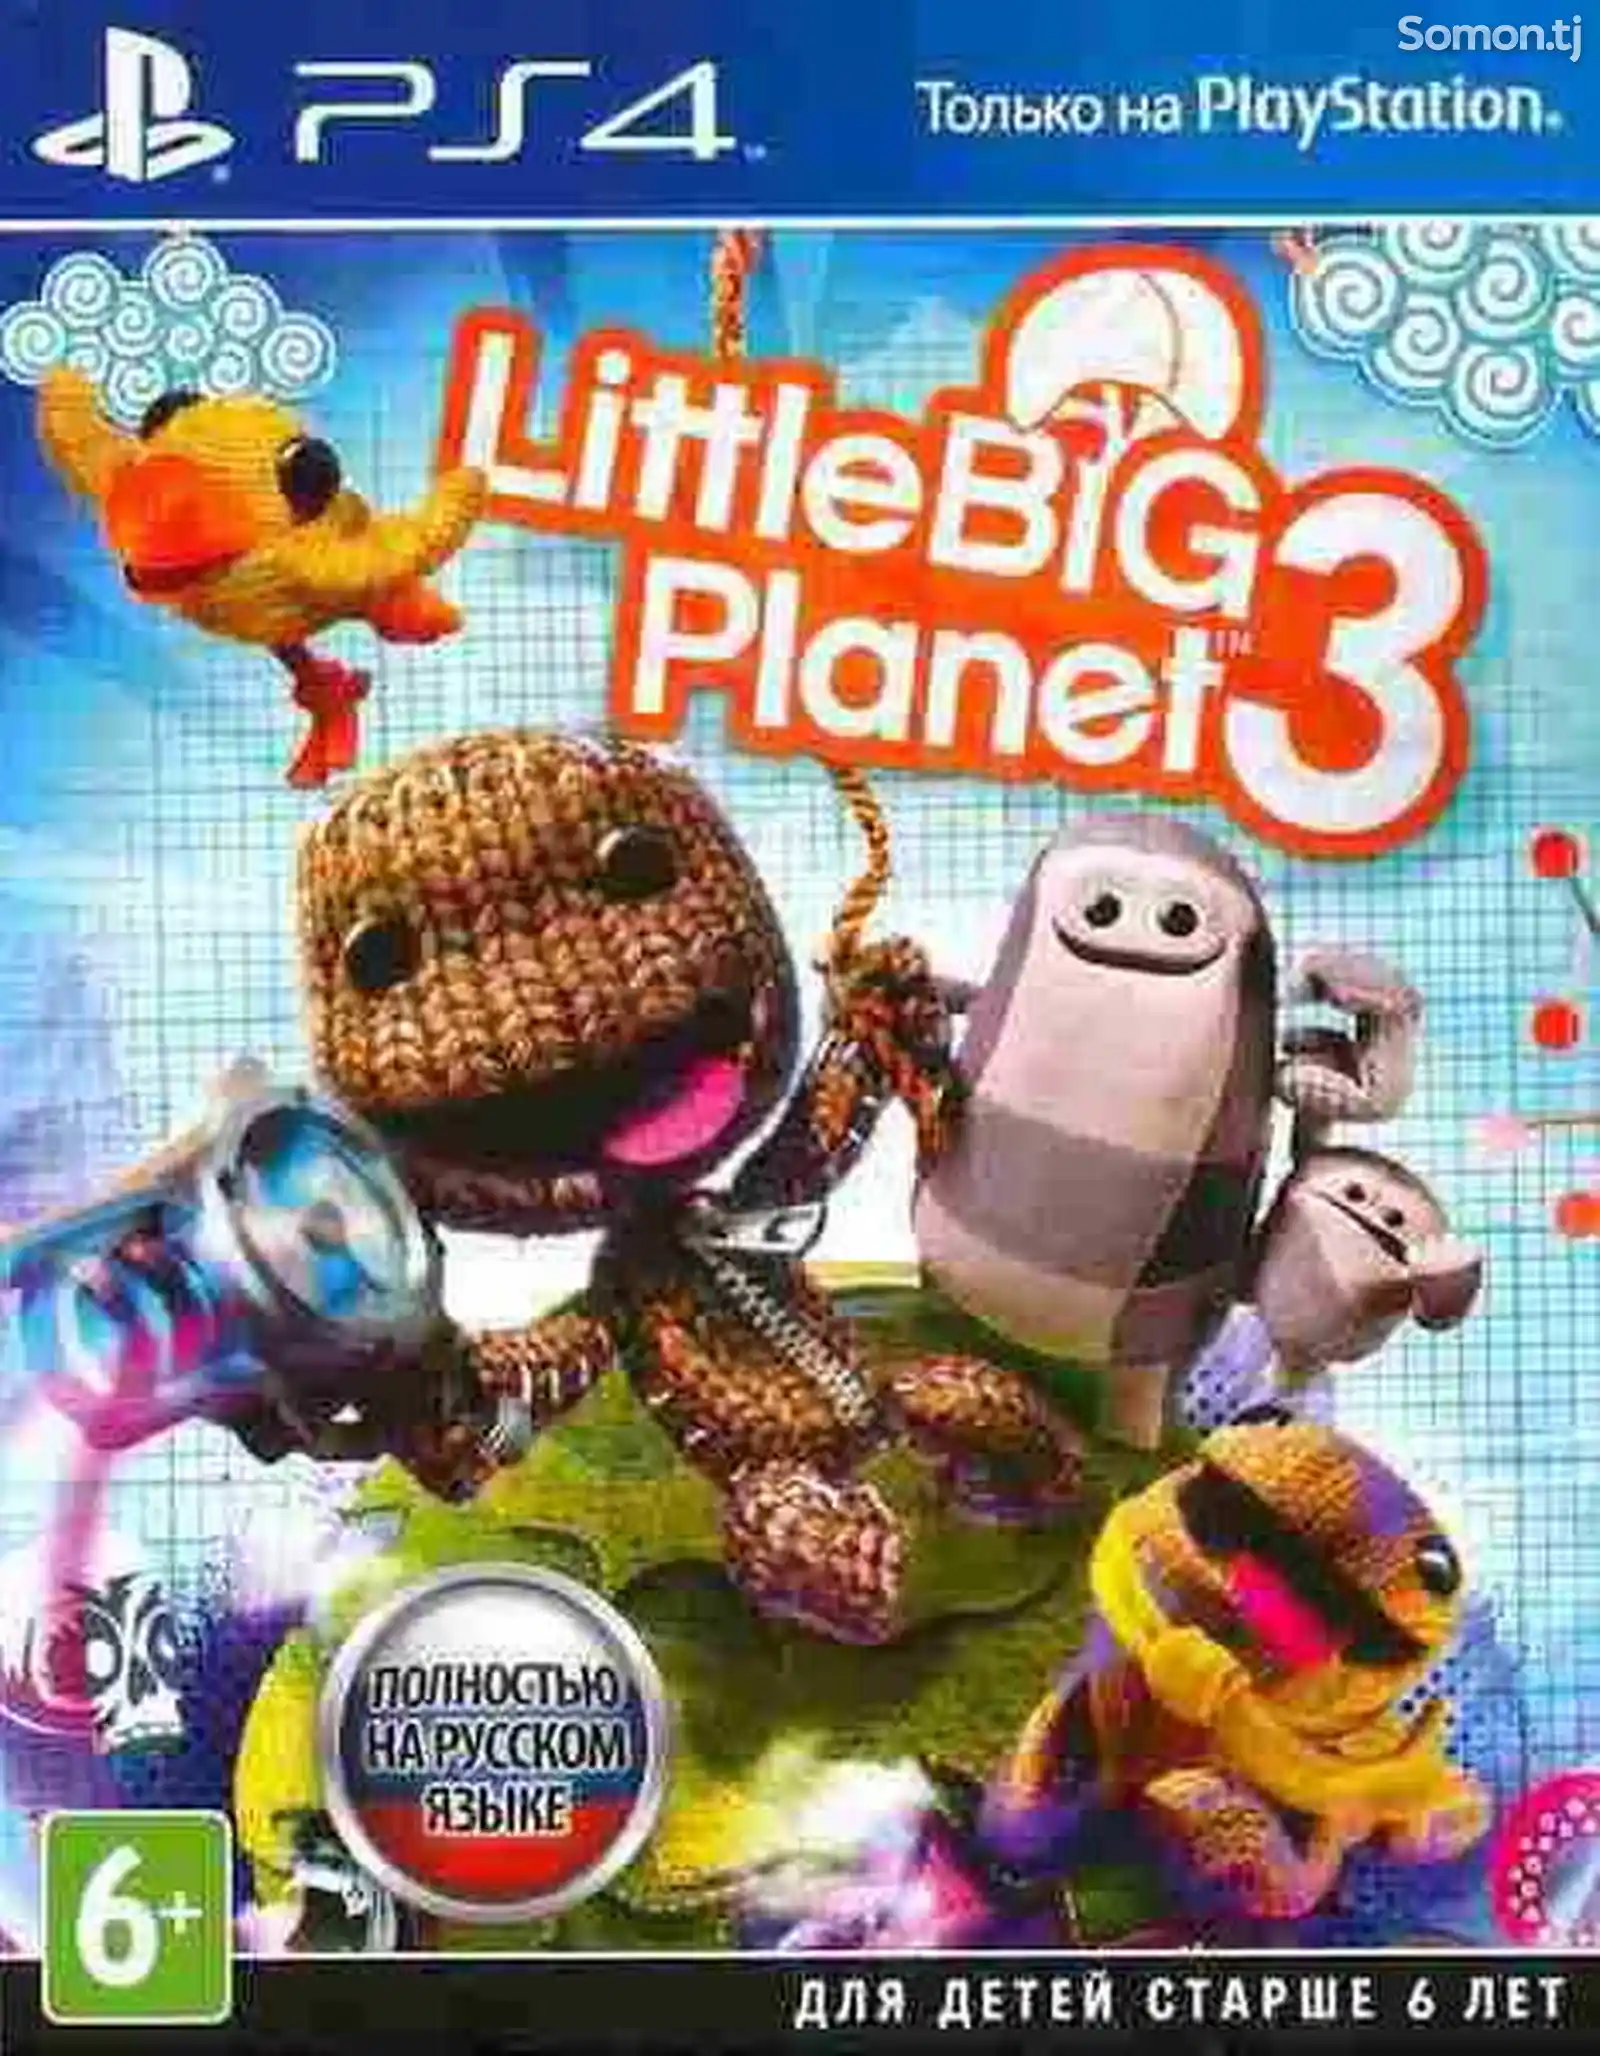 Игра Little big planet 3 для PS-4 / 5.05 / 6.72 / 7.02 / 7.55 / 9.00 /